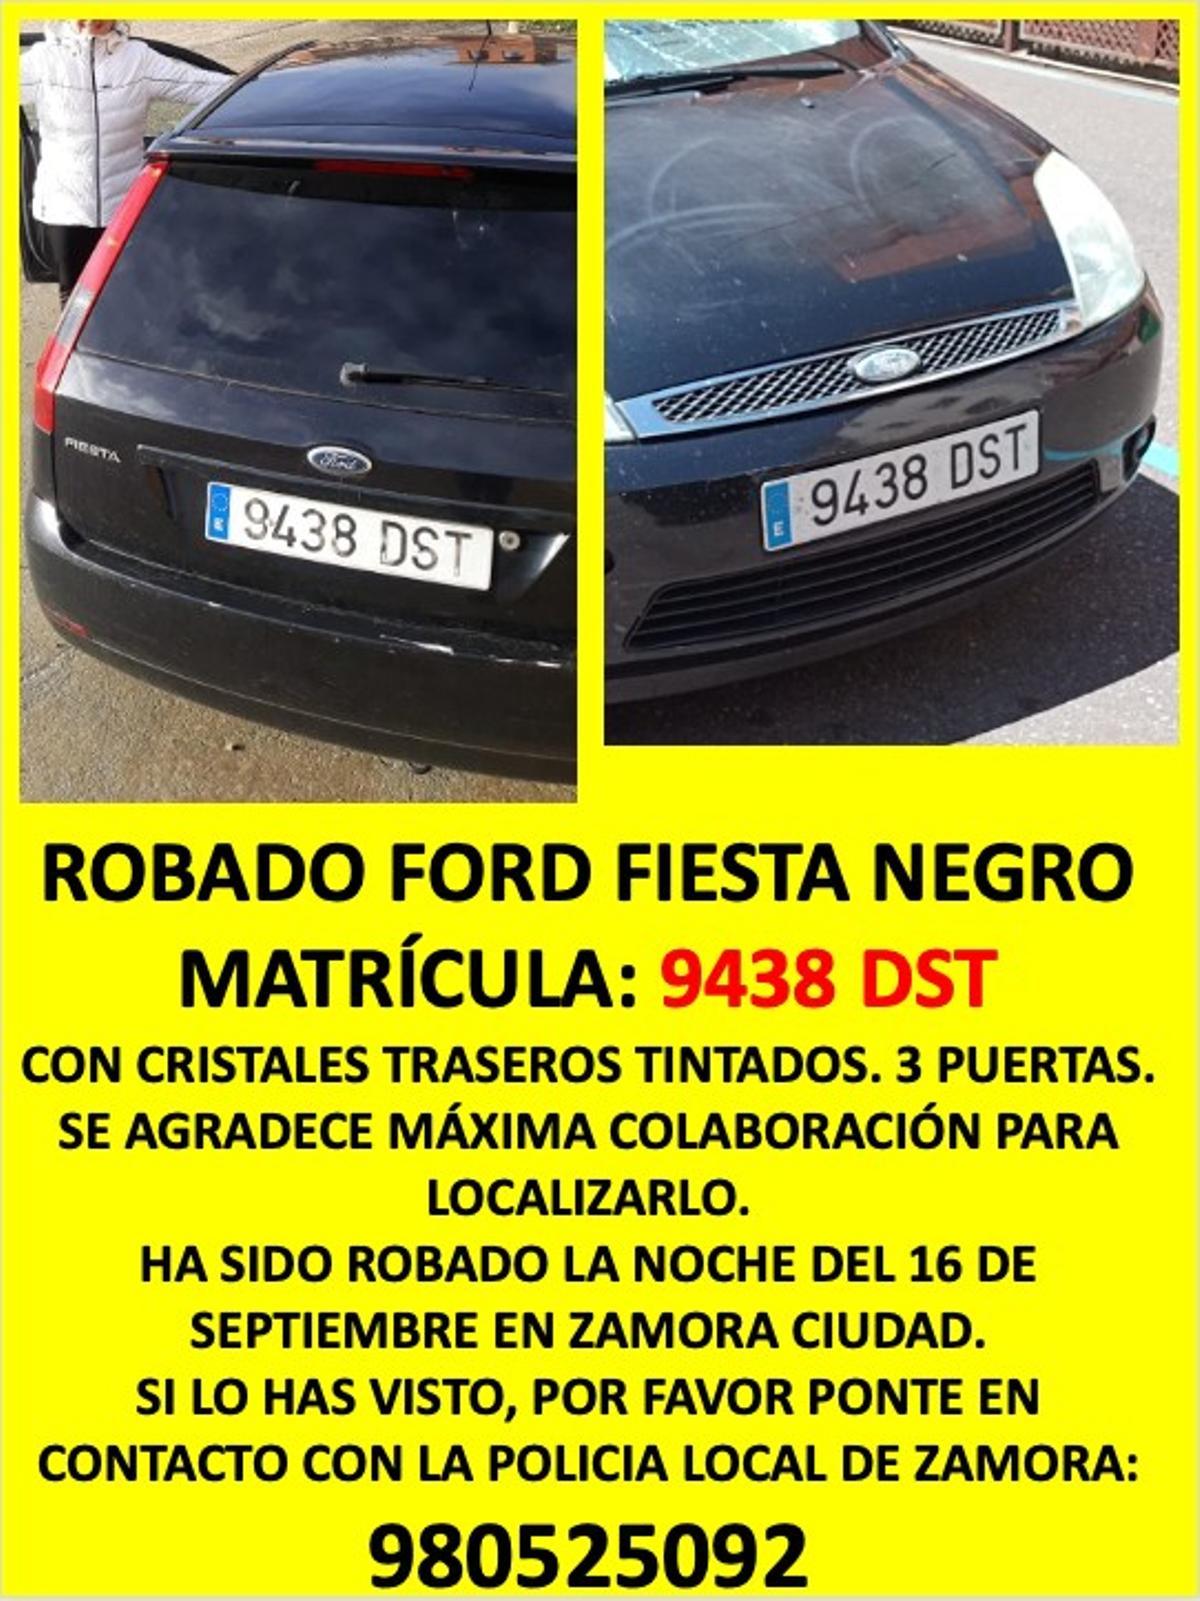 Ford Fiesta negro.